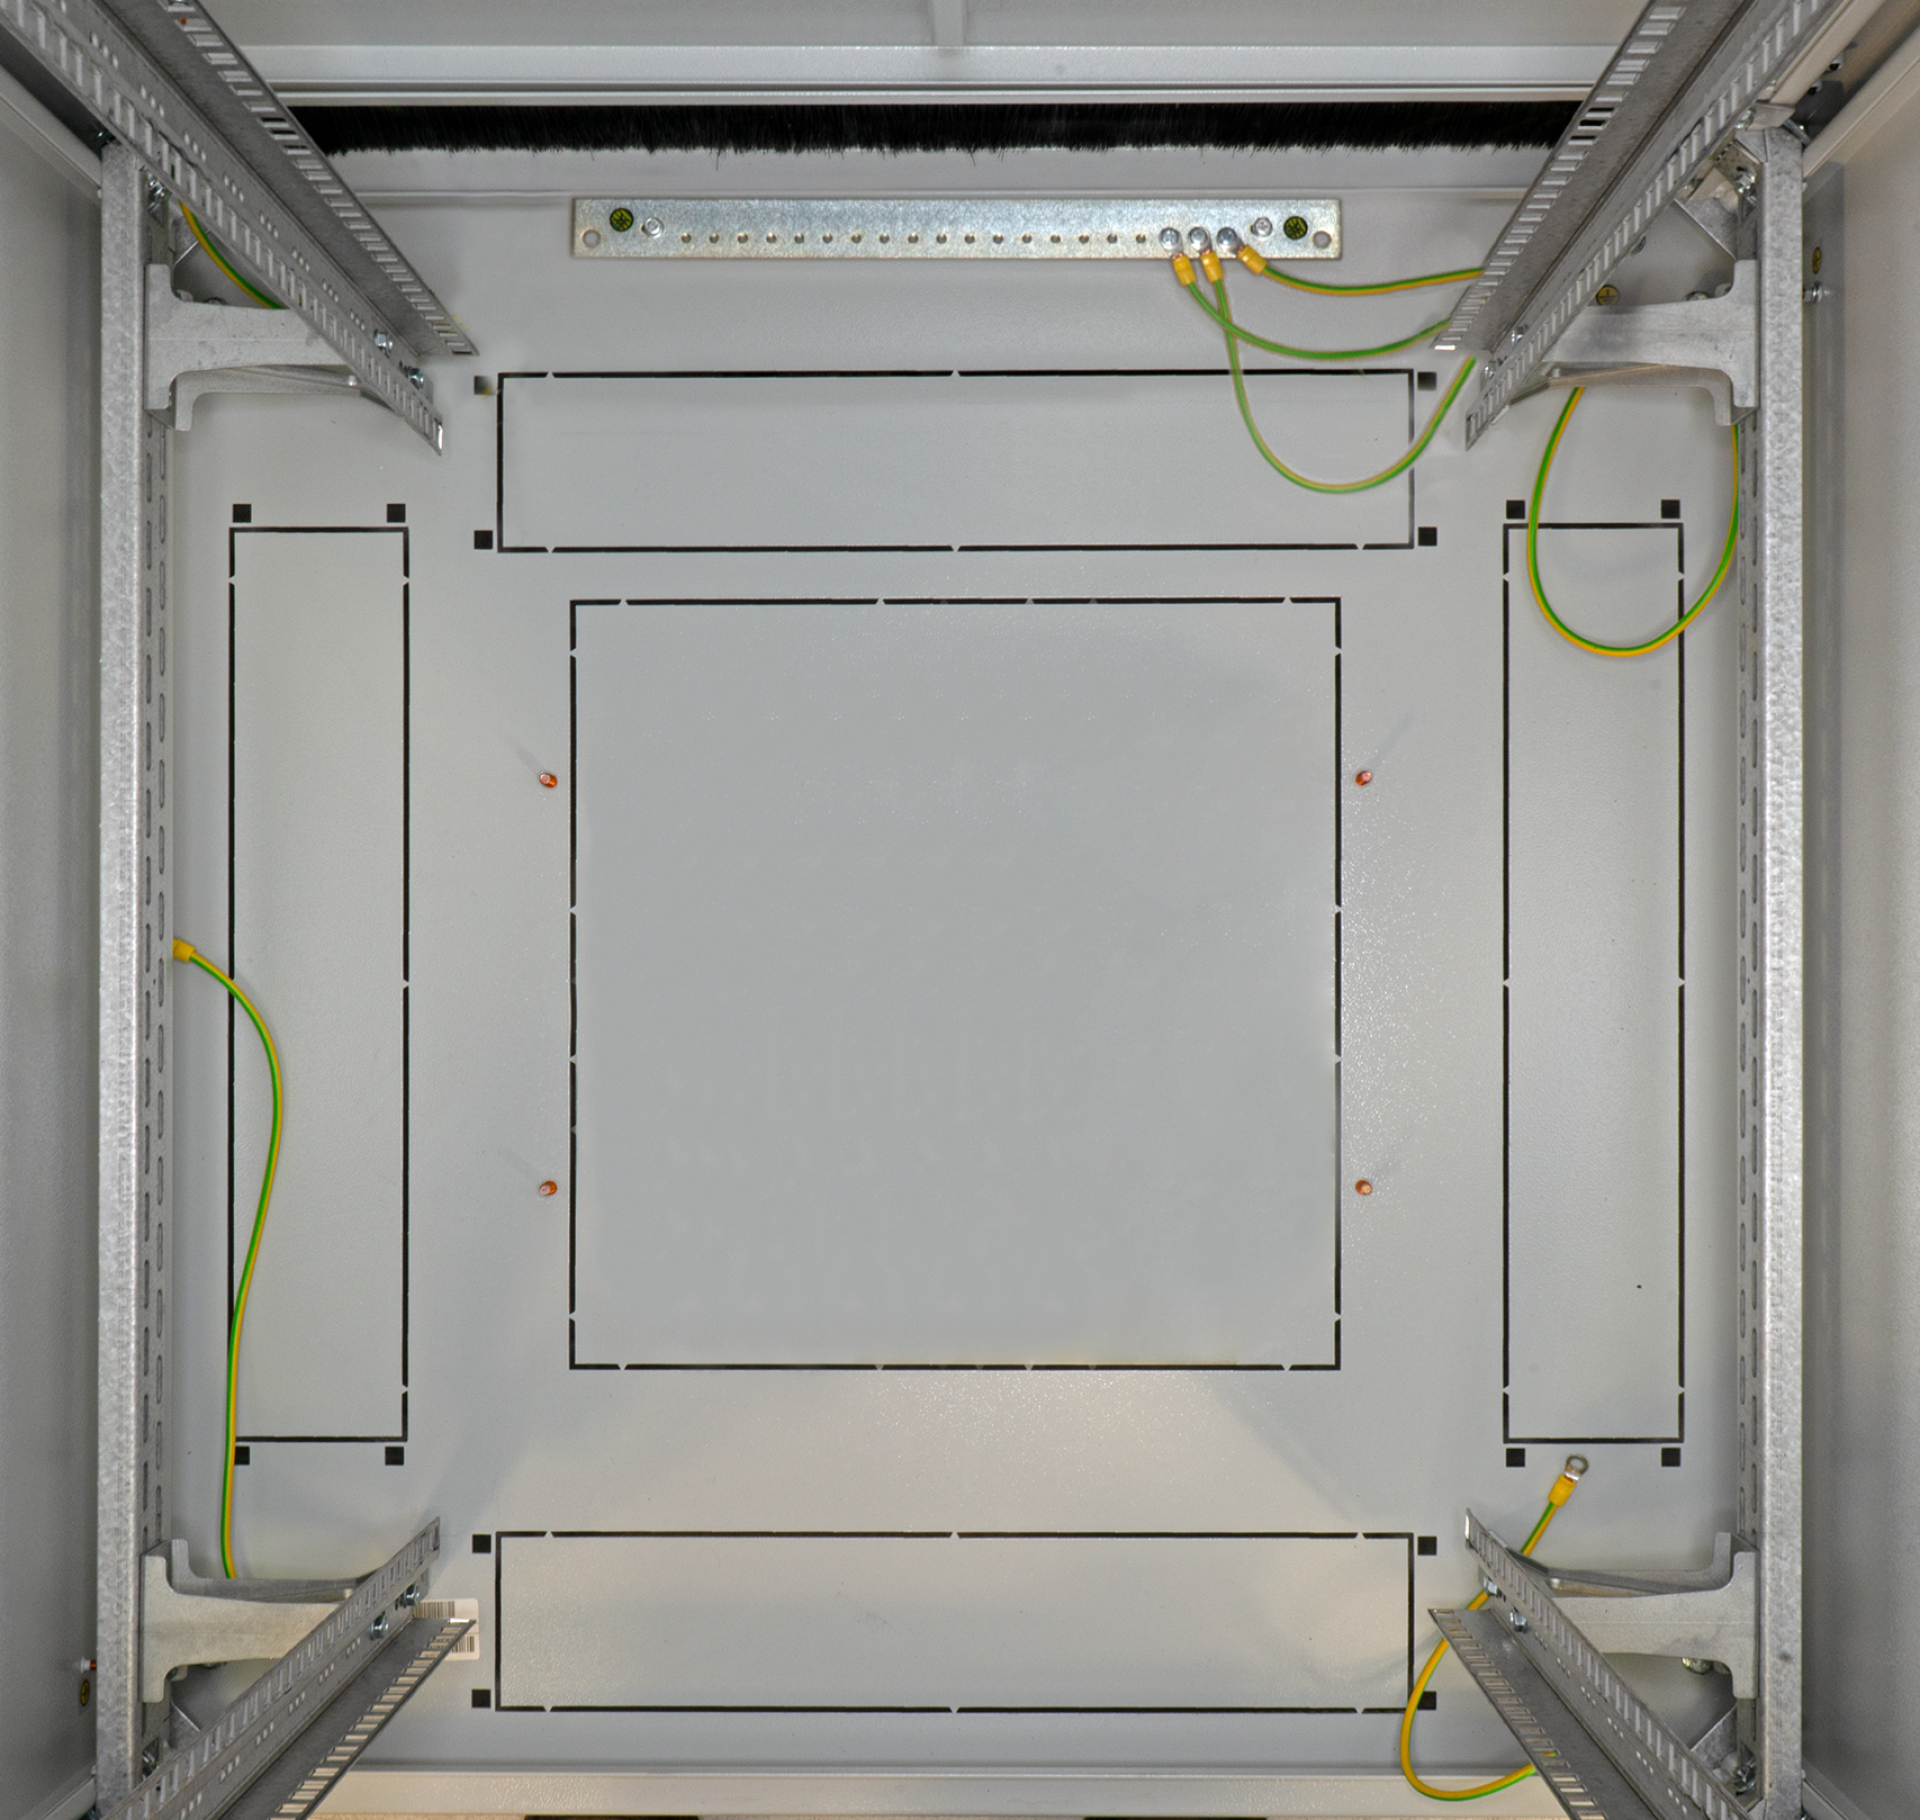 19" Network Cabinet PRO-Modular 42U, 800x800 mm, RAL9005